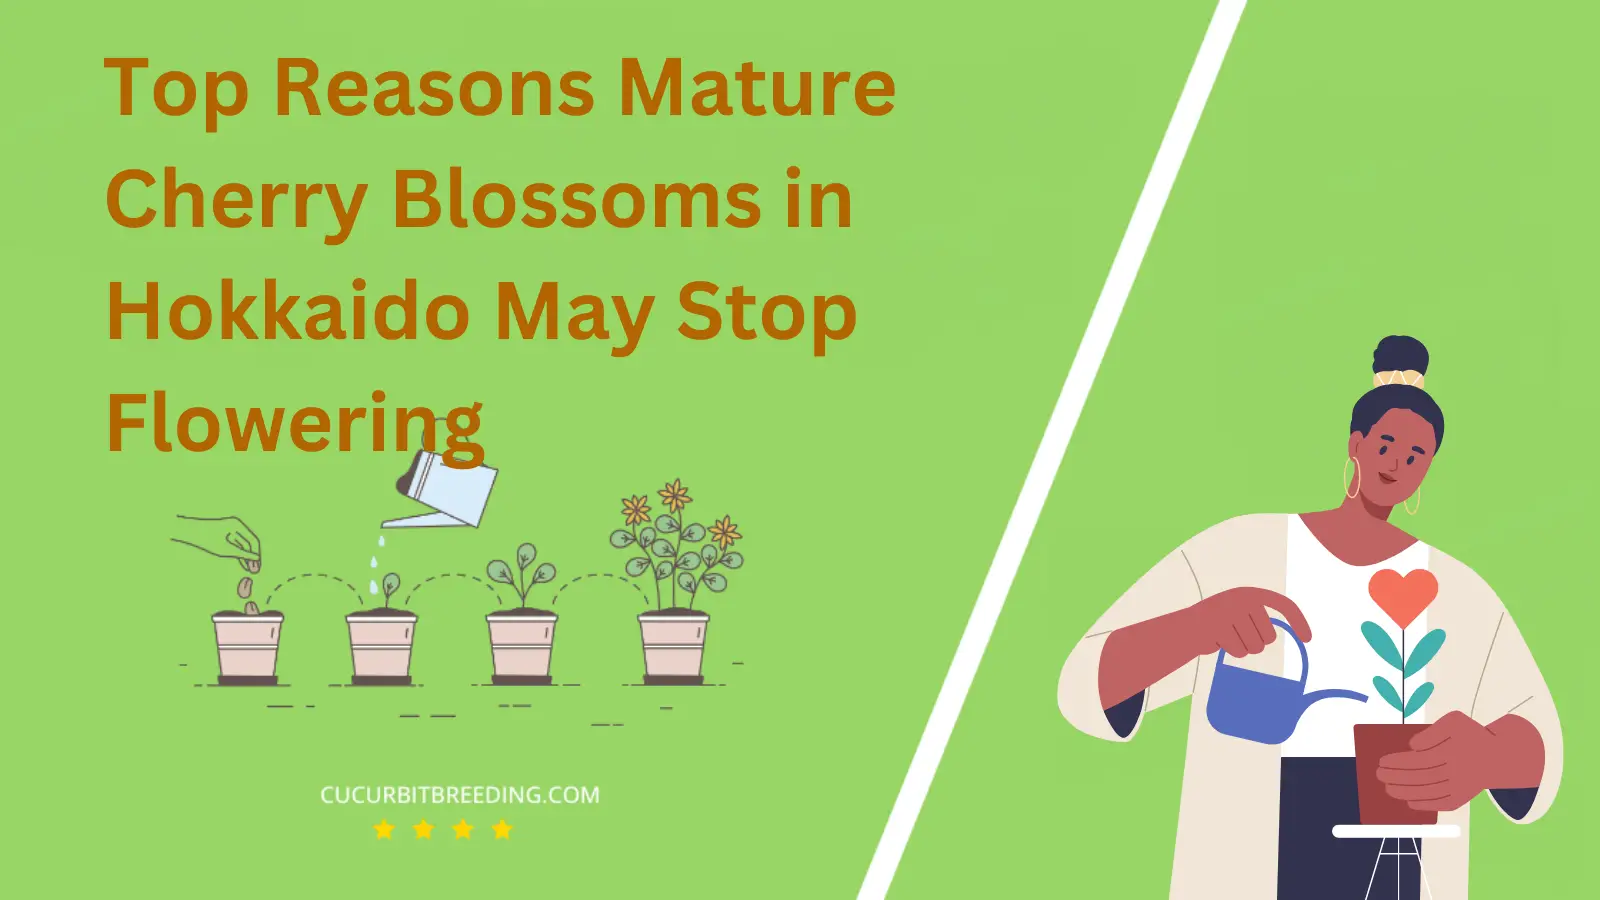 Top Reasons Mature Cherry Blossoms in Hokkaido May Stop Flowering